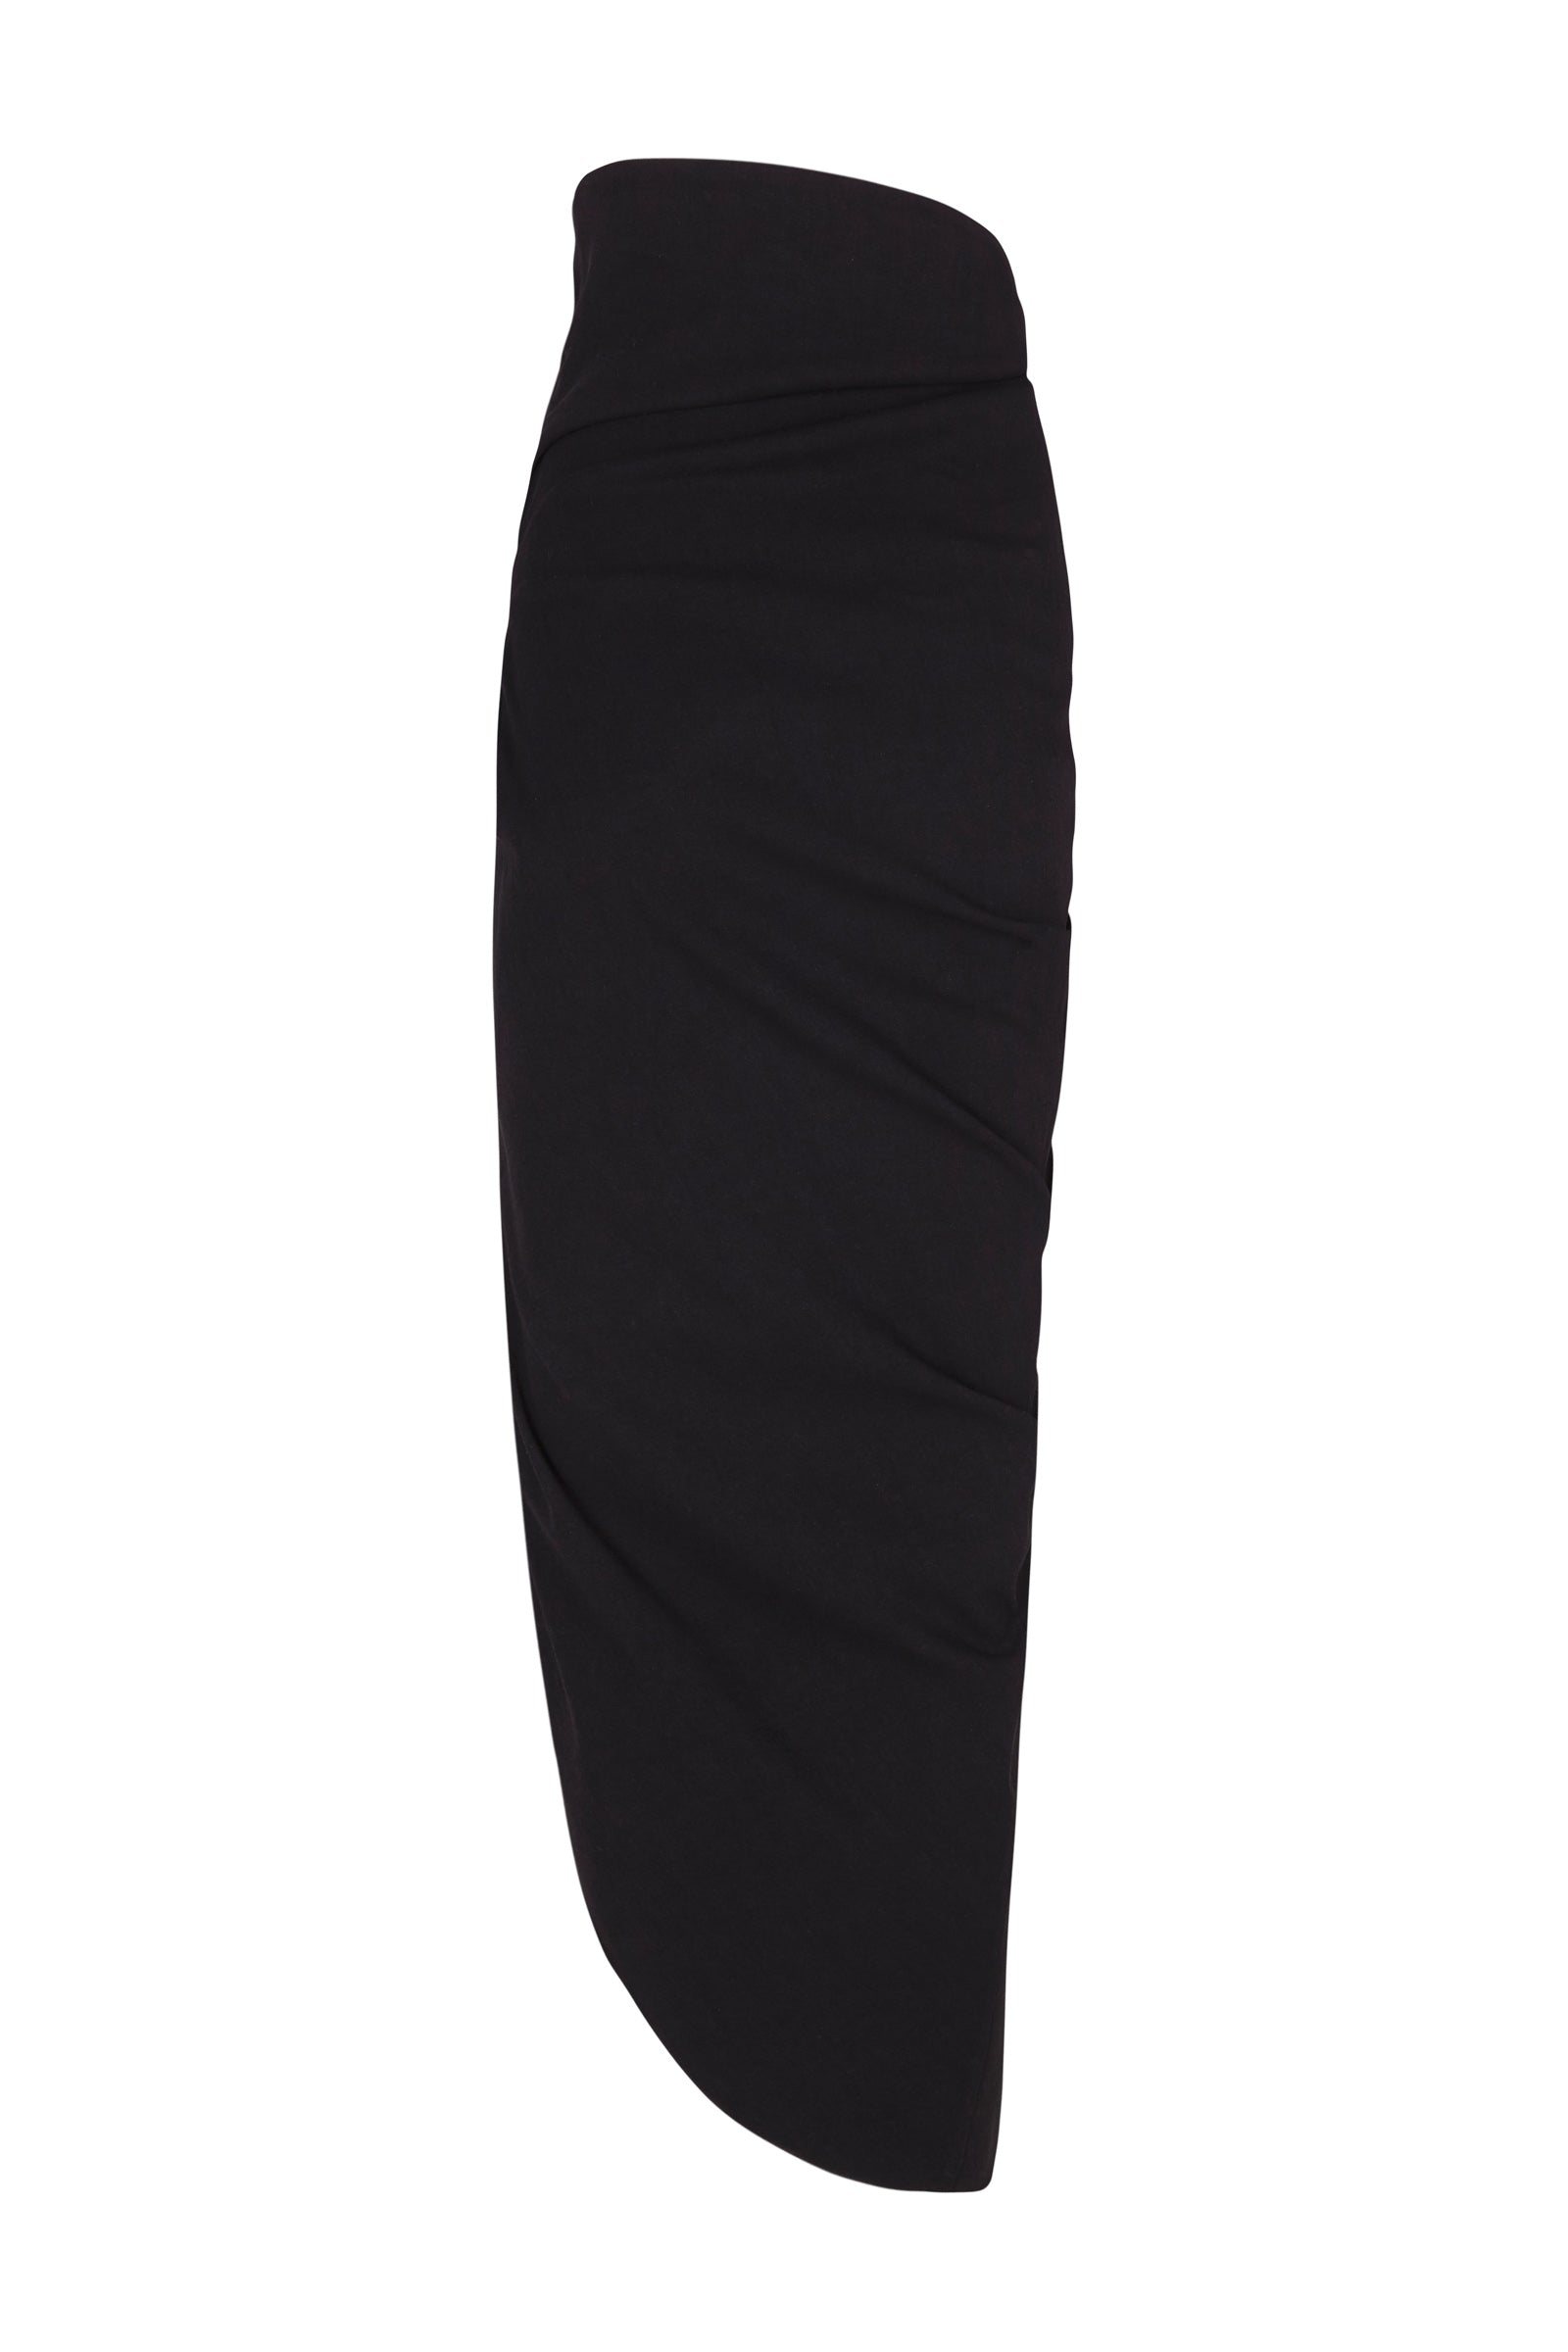 Cortana - Candela, black stretch linen skirt